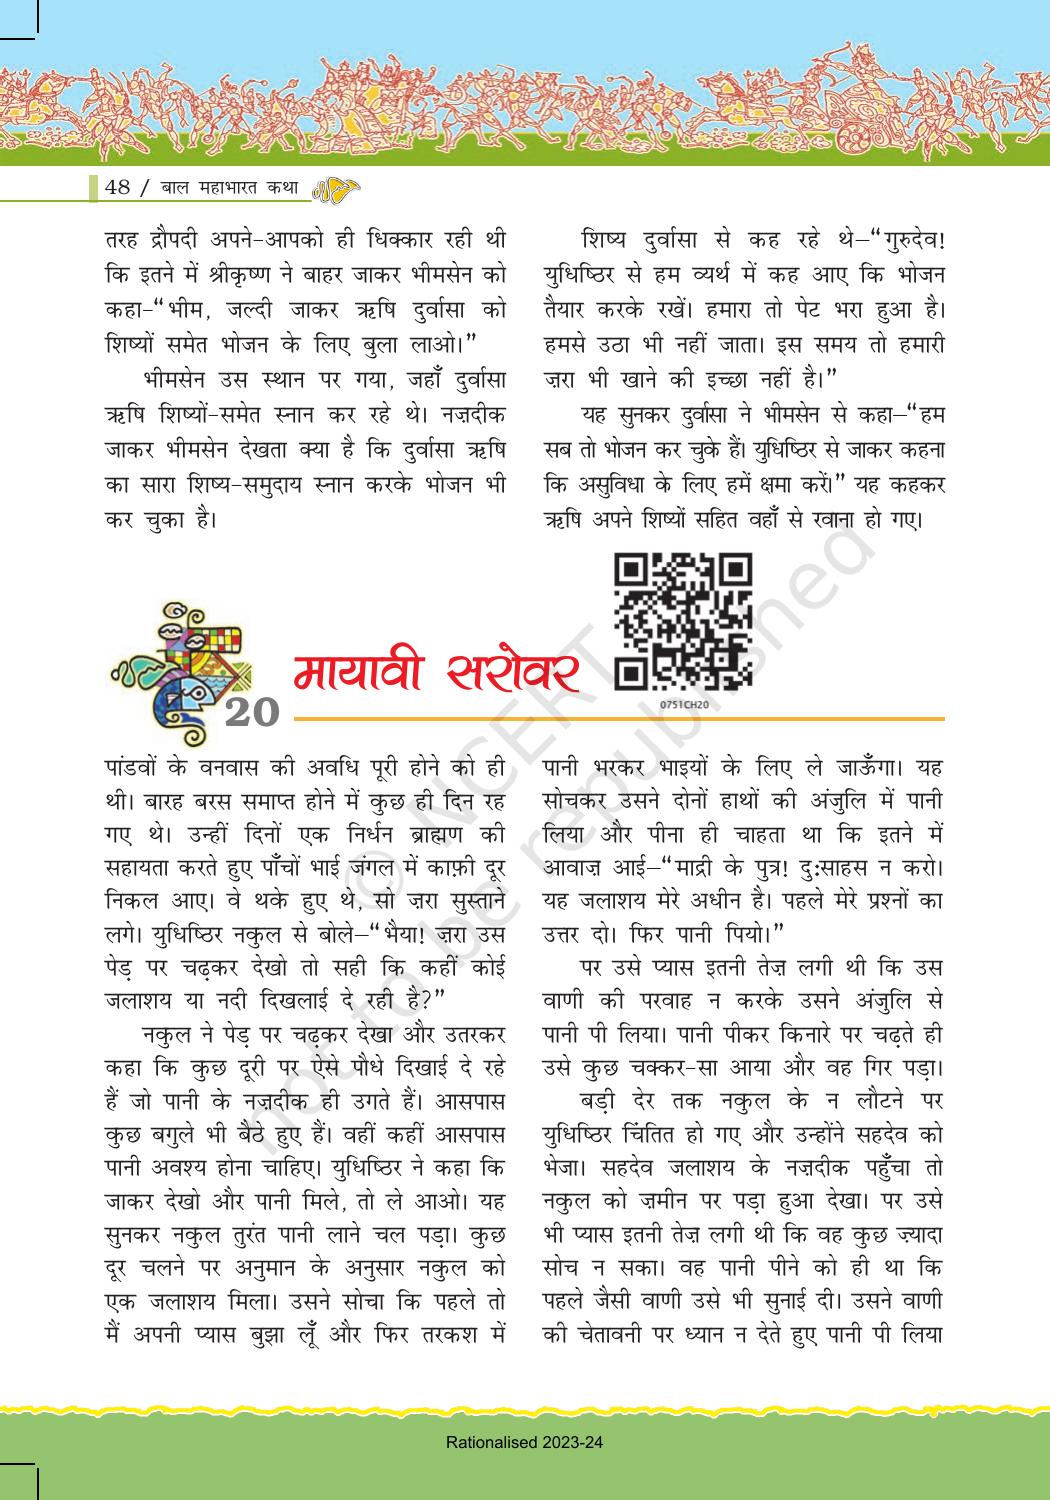 NCERT Book for Class 7 Hindi: Chapter 1-बाल महाभारत कथा - Page 48